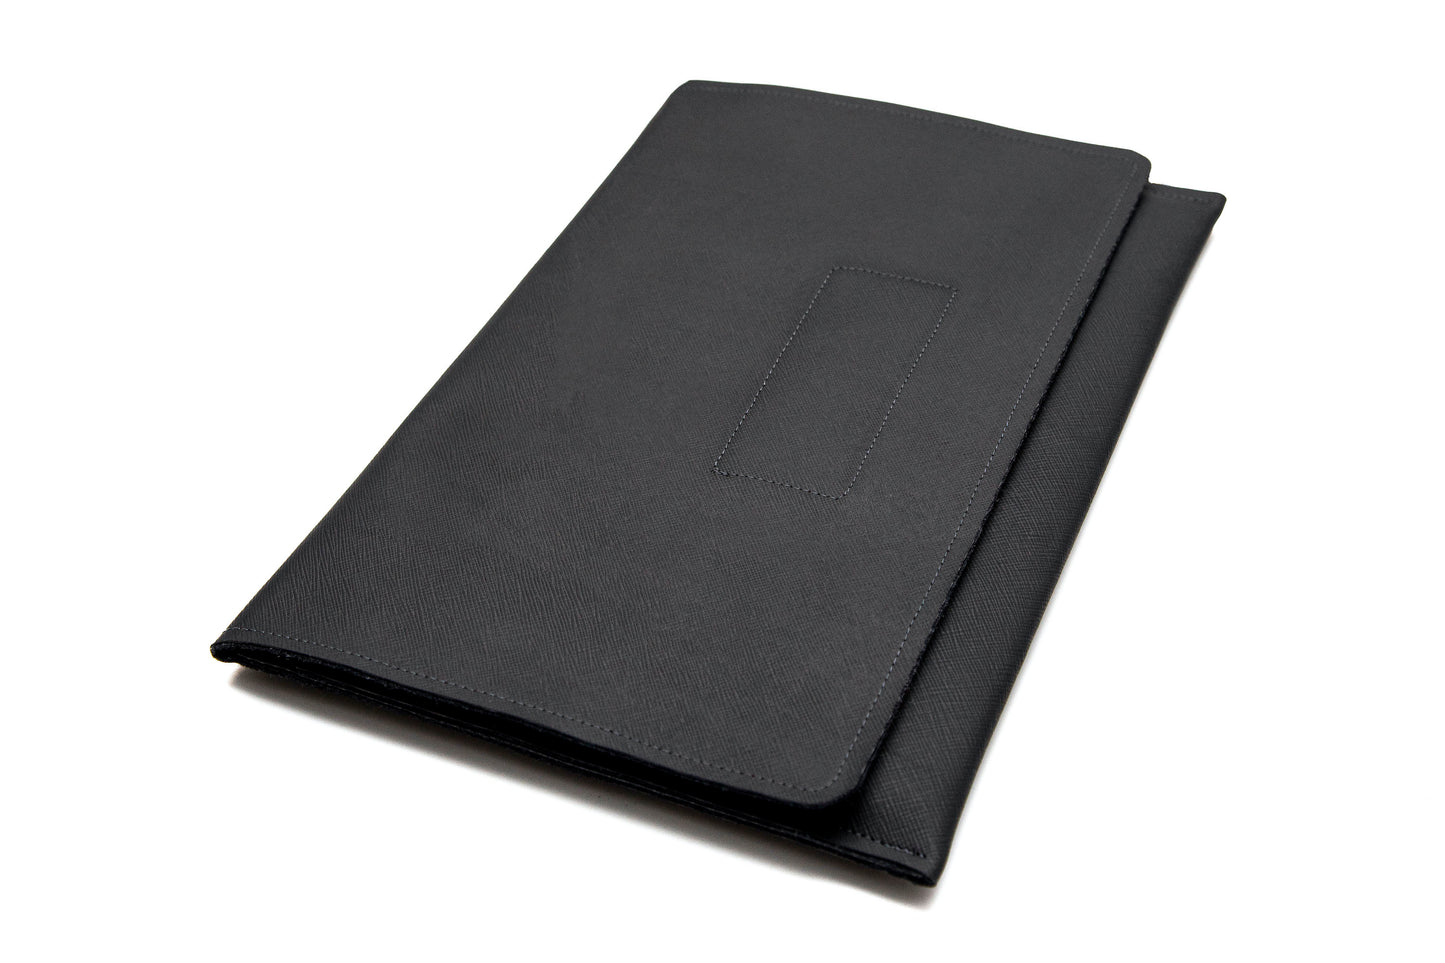 Handmade MacBook Cover - Black & Charcoal